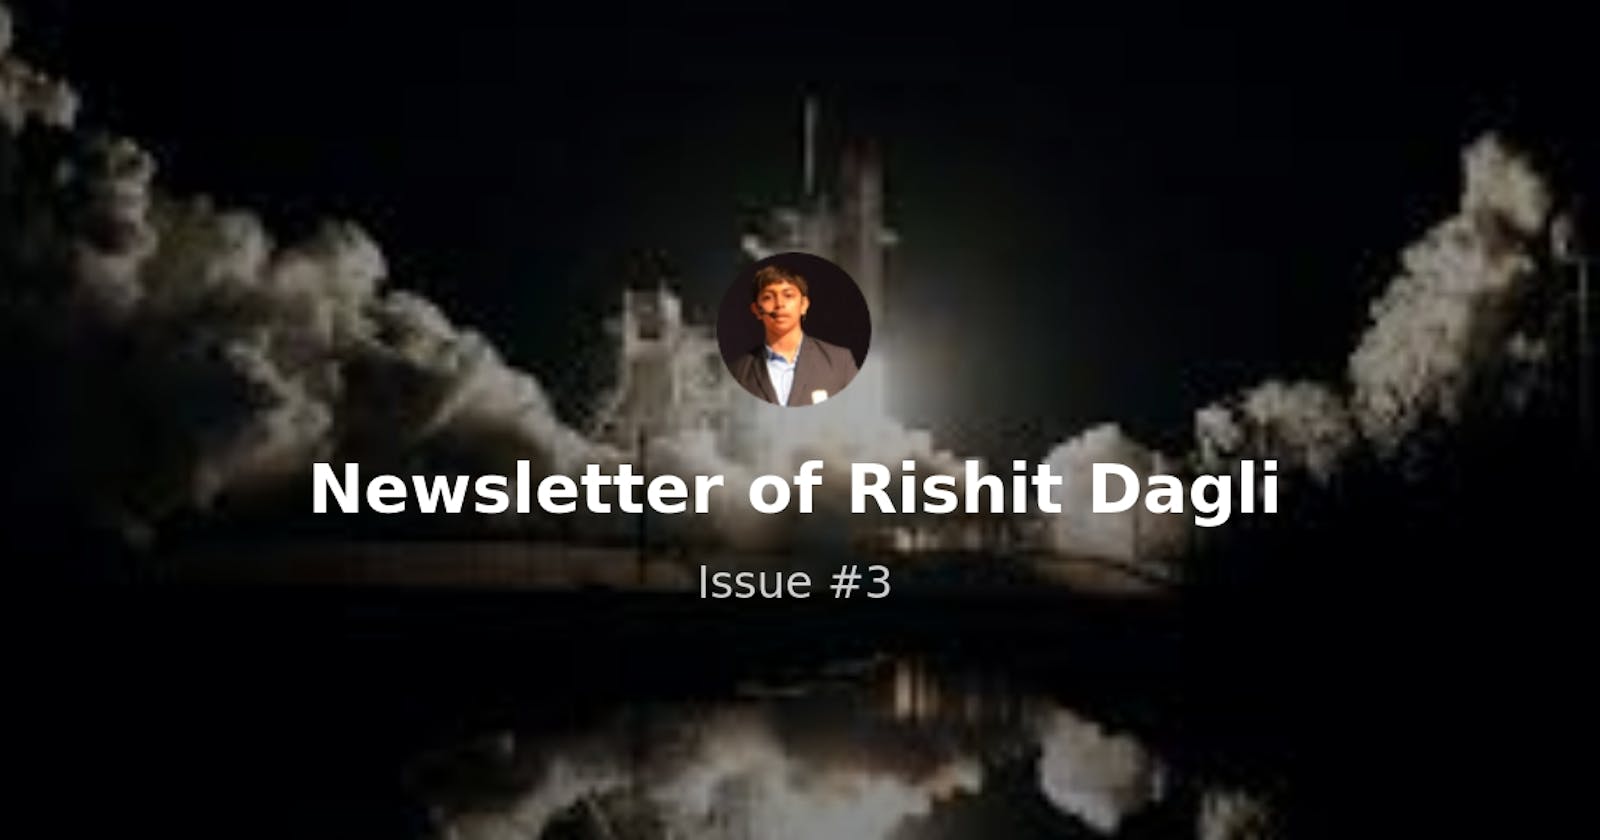 Newsletter of Rishit Dagli - Issue #3